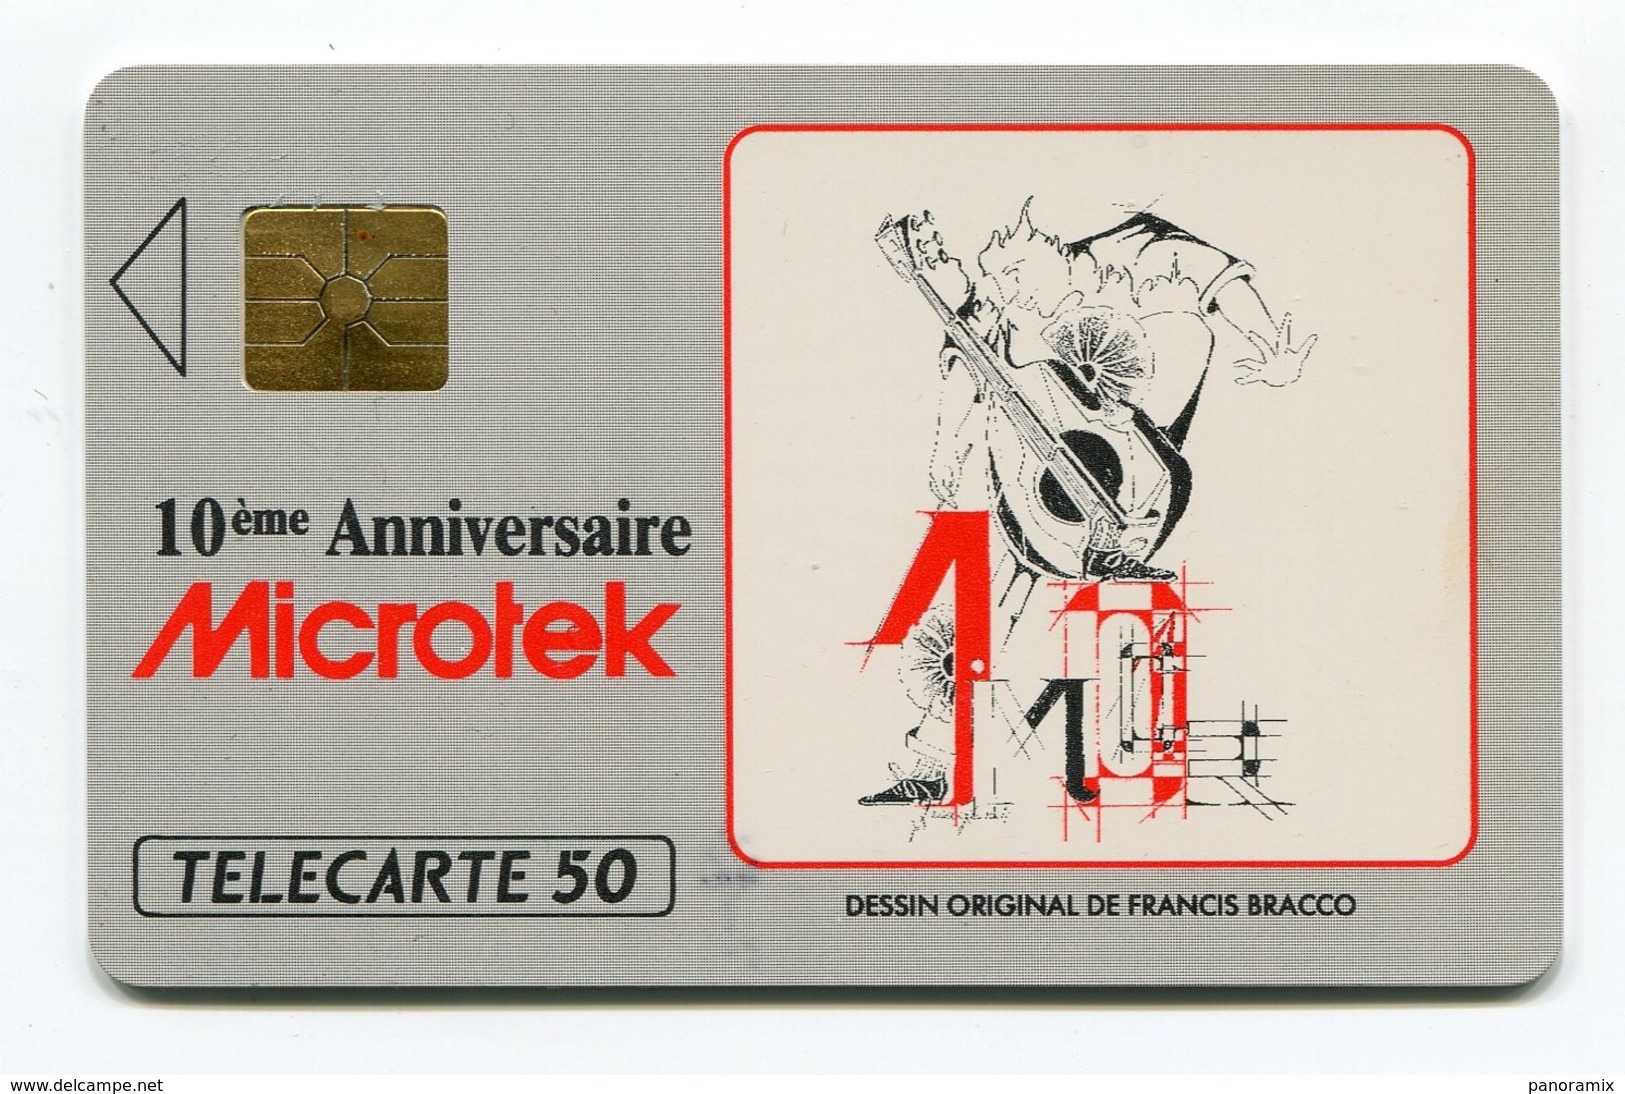 Telecarte °_ Monaco-3-Microteck-10 Ans-gem-04.91- R/V 4909 - Monaco